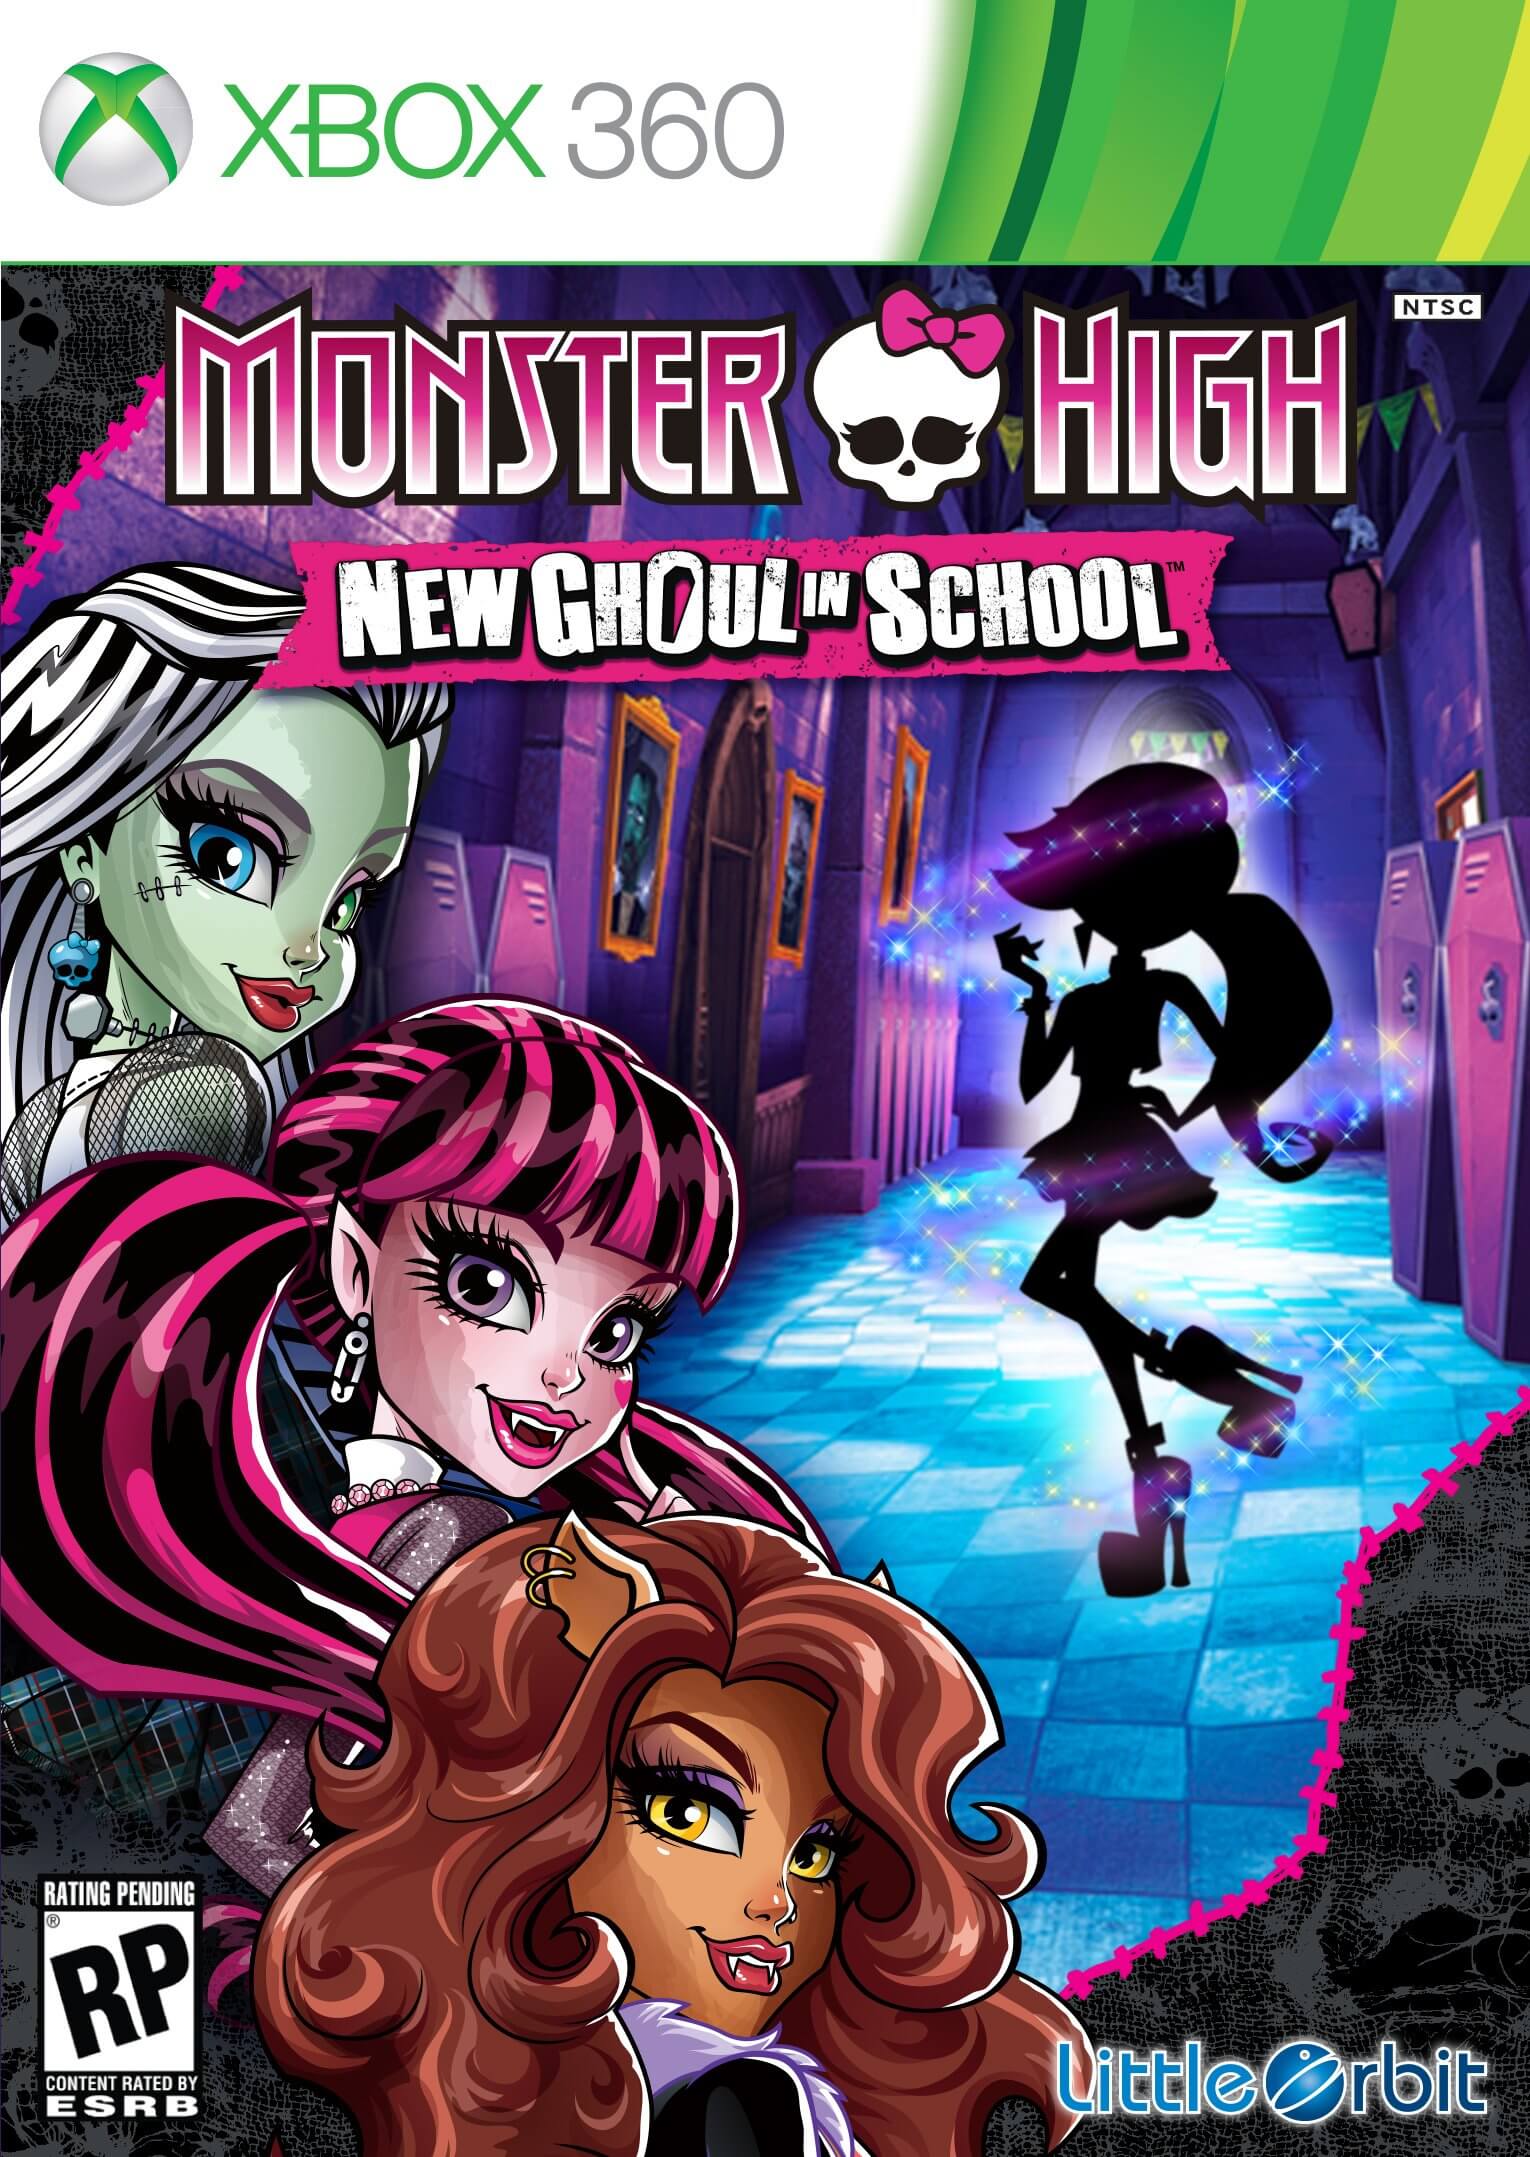 New ghoul school. Игра Monster High New Ghoul. Монстер Хай новая нечисть школы. Monster High New Ghoul in School. Барби Xbox 360.